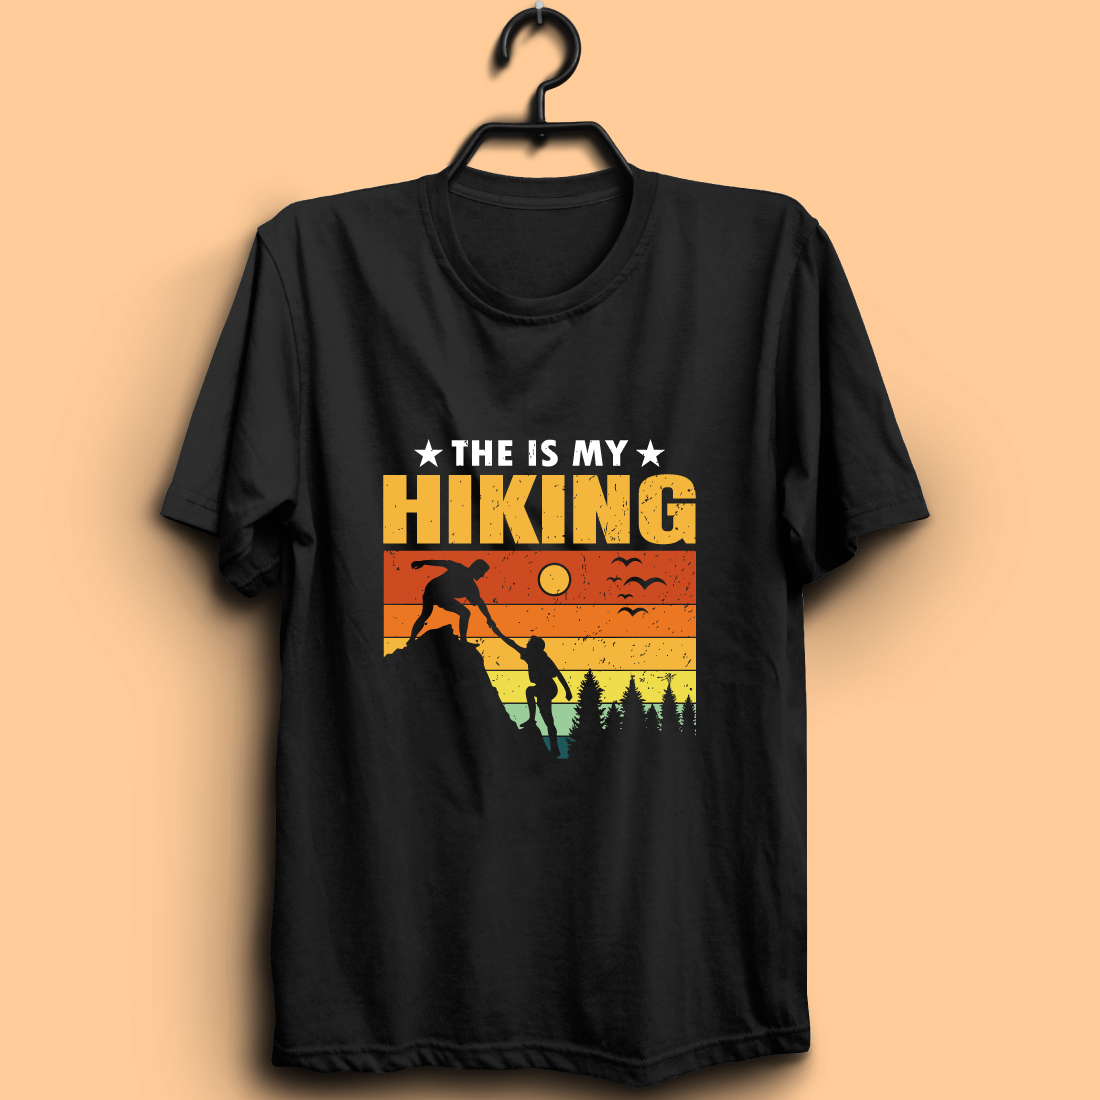 hiking t shirt design04 602